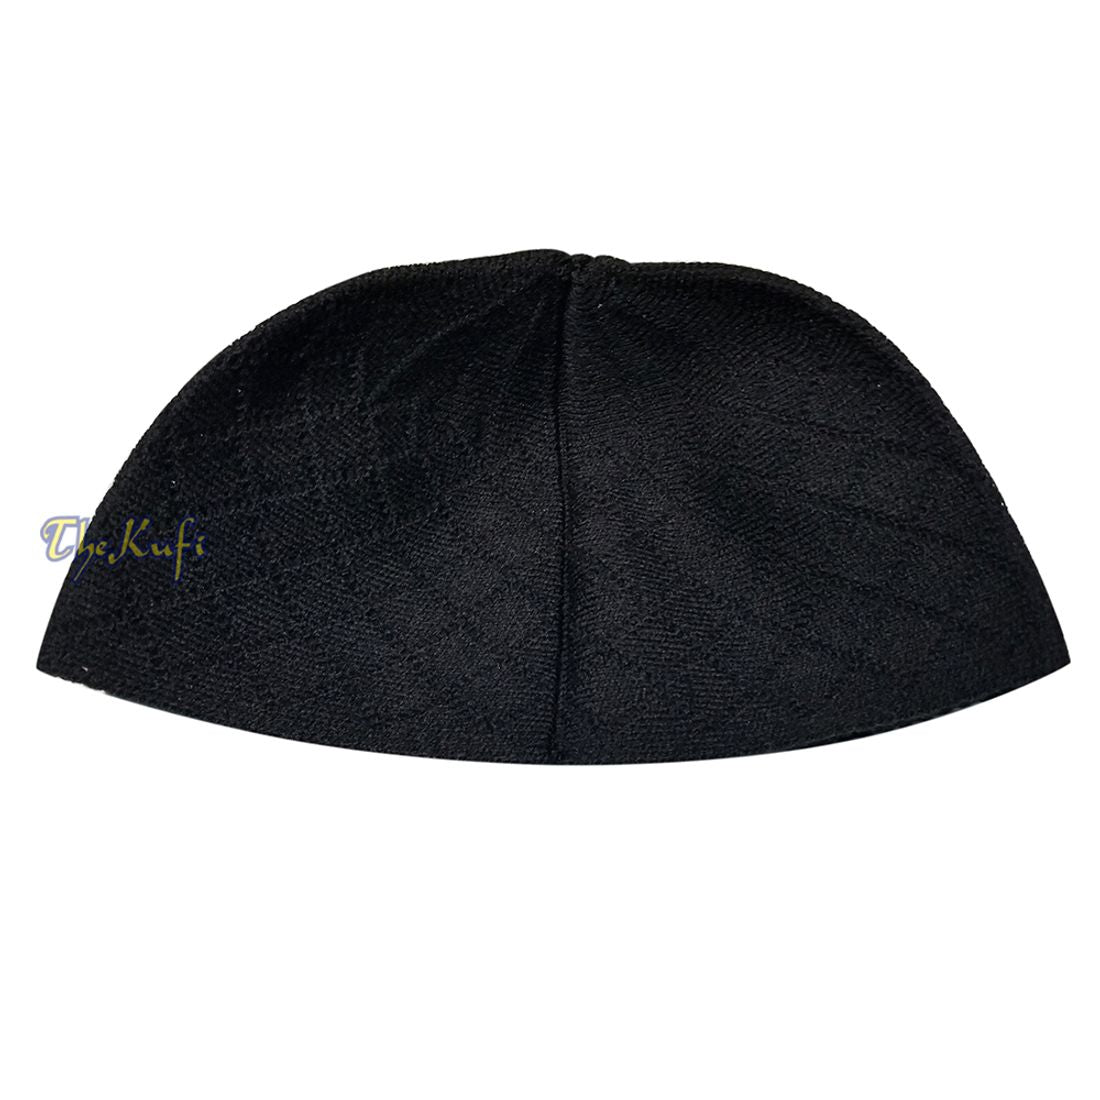 Skull Cap Kufi for Winter – Black Acrylic 2-3mm Thick Turkish Prayer Hat